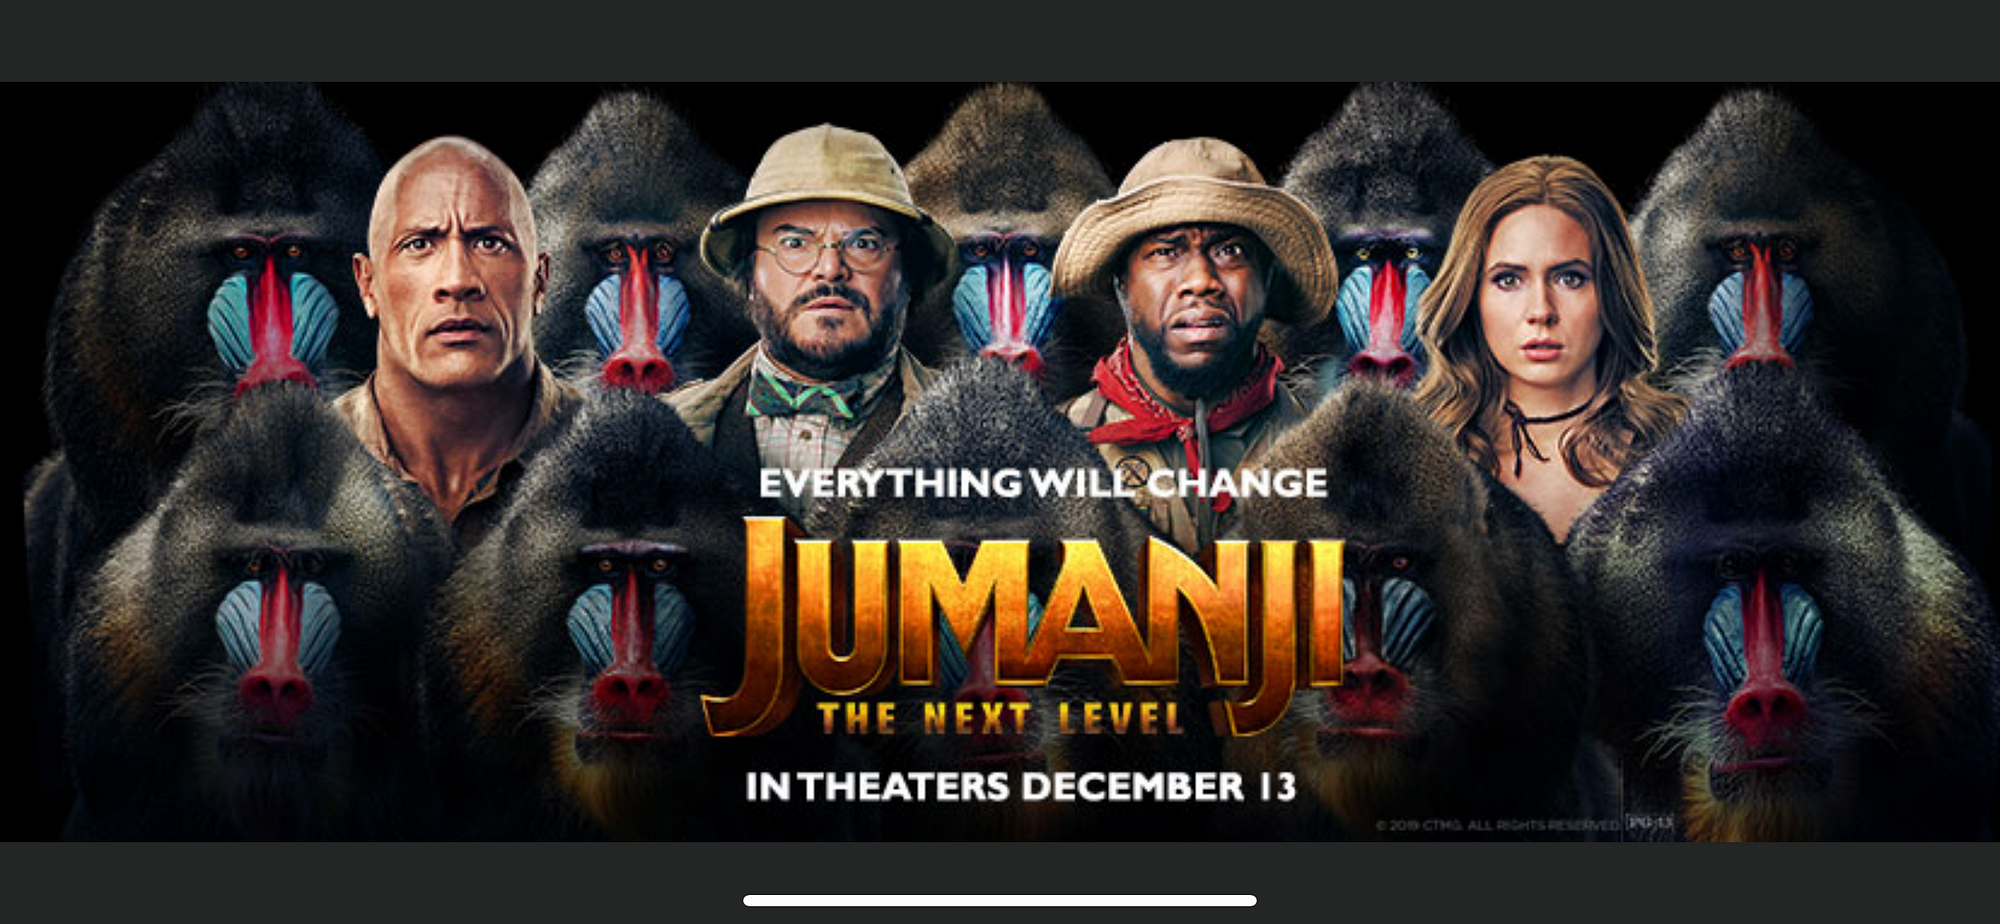 Jumanji: The Next Level (2019)